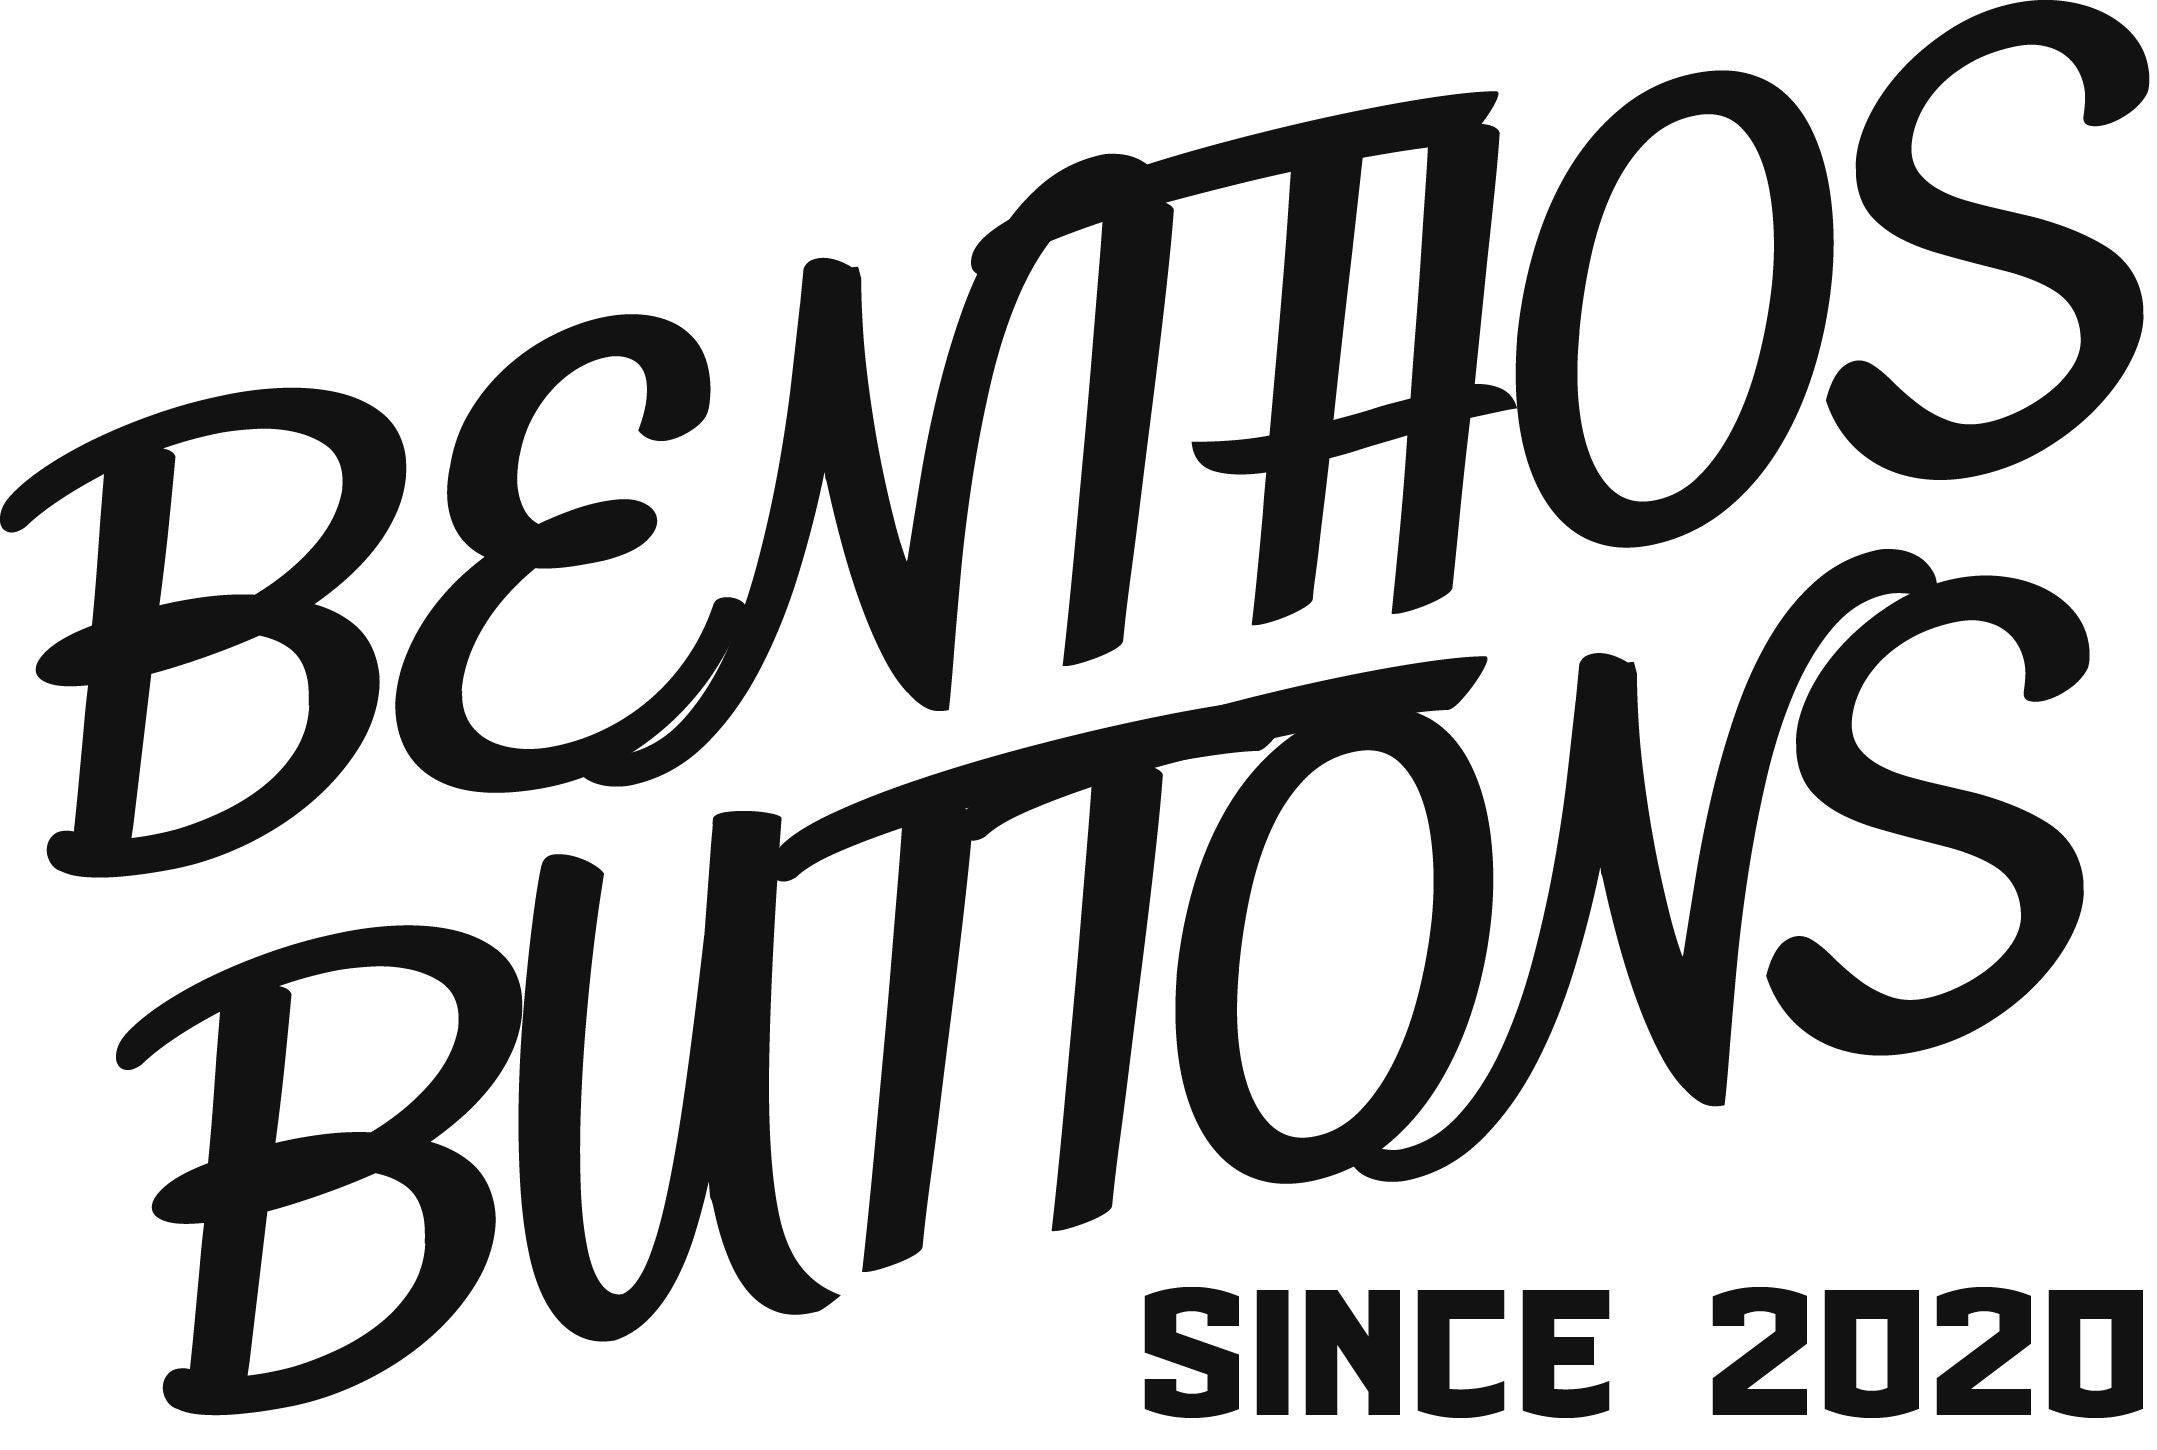 LOGO 1 - Benthos Buttons